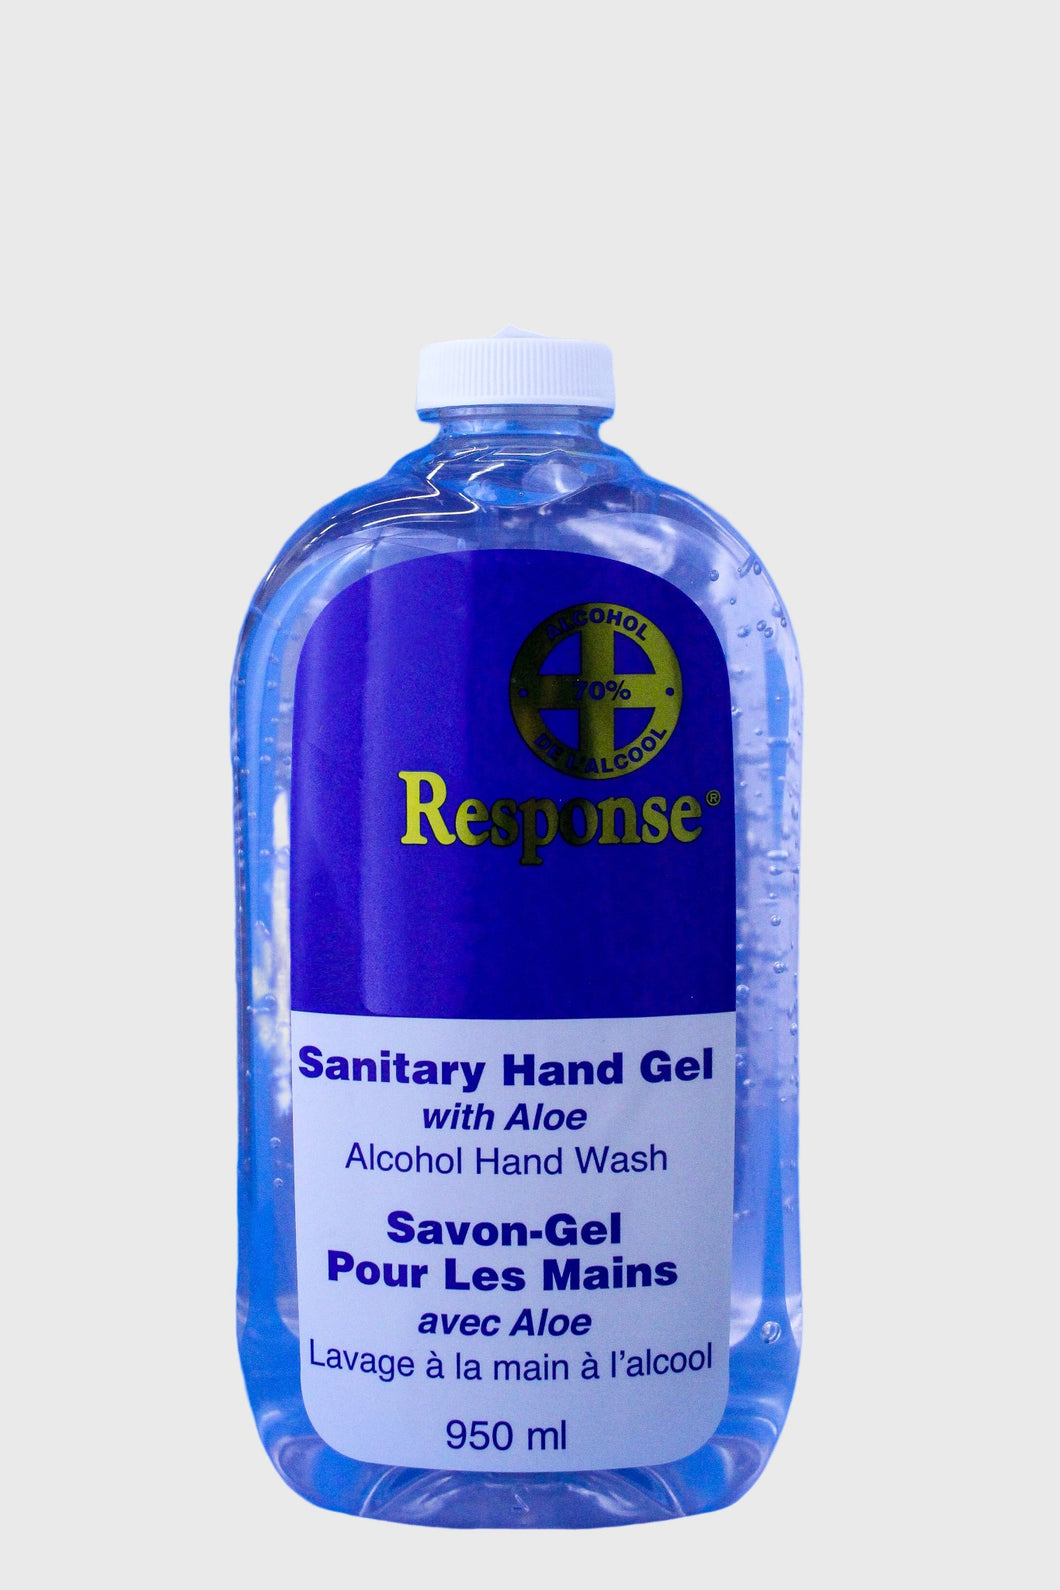 Response Sanitary Hand Gel